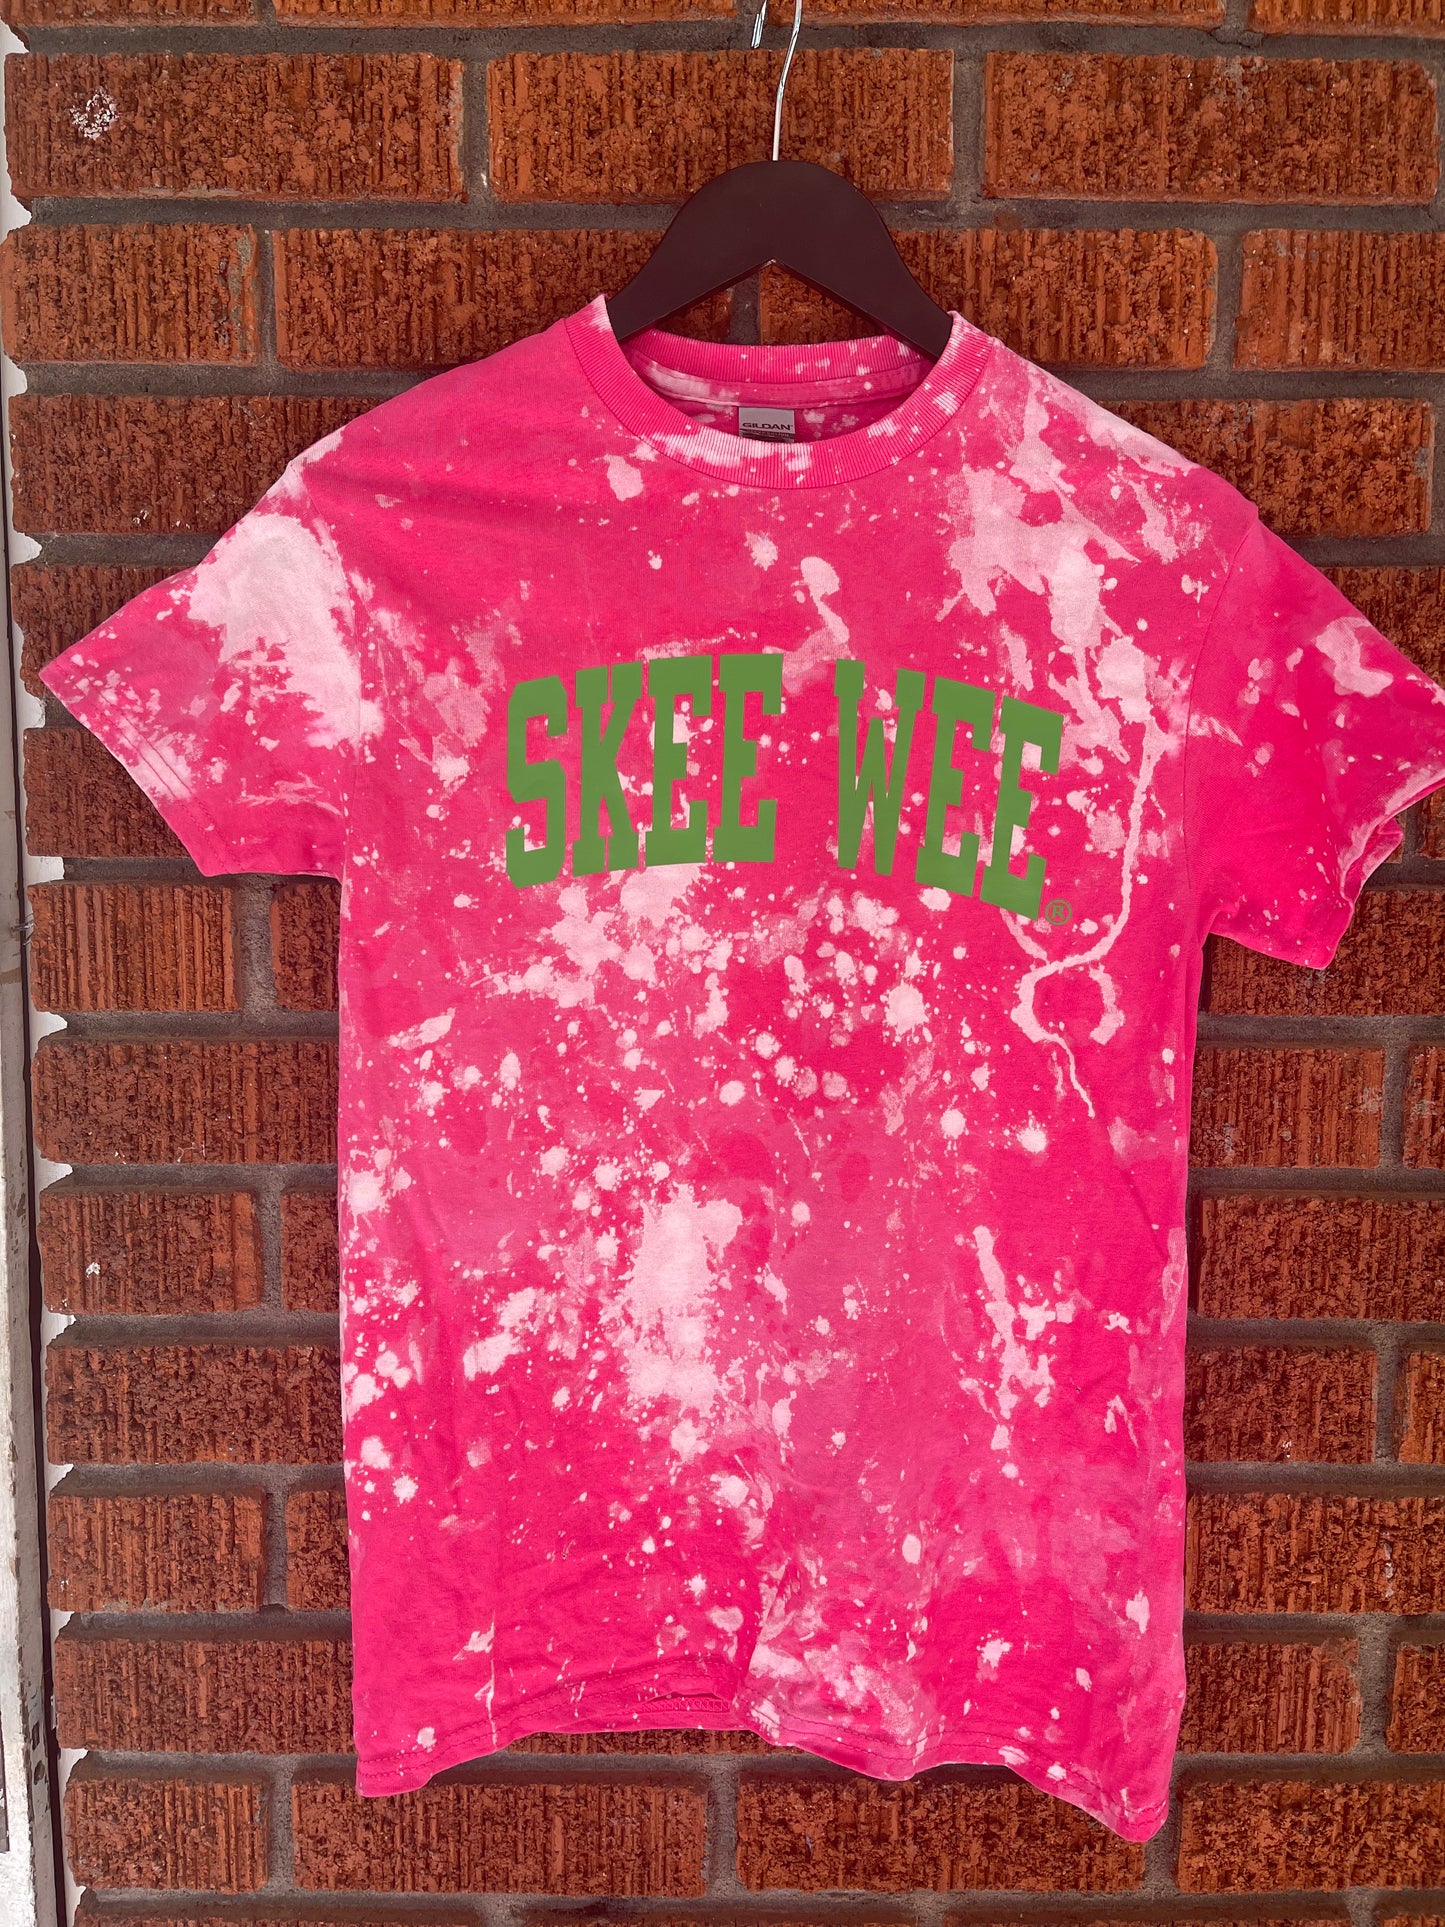 The Pink Skee Wee Crew Neck T-shirt - [CCL Designs] - AKA Alpha Kappa Alpha Pink and Green handmade hand bleach tie dye